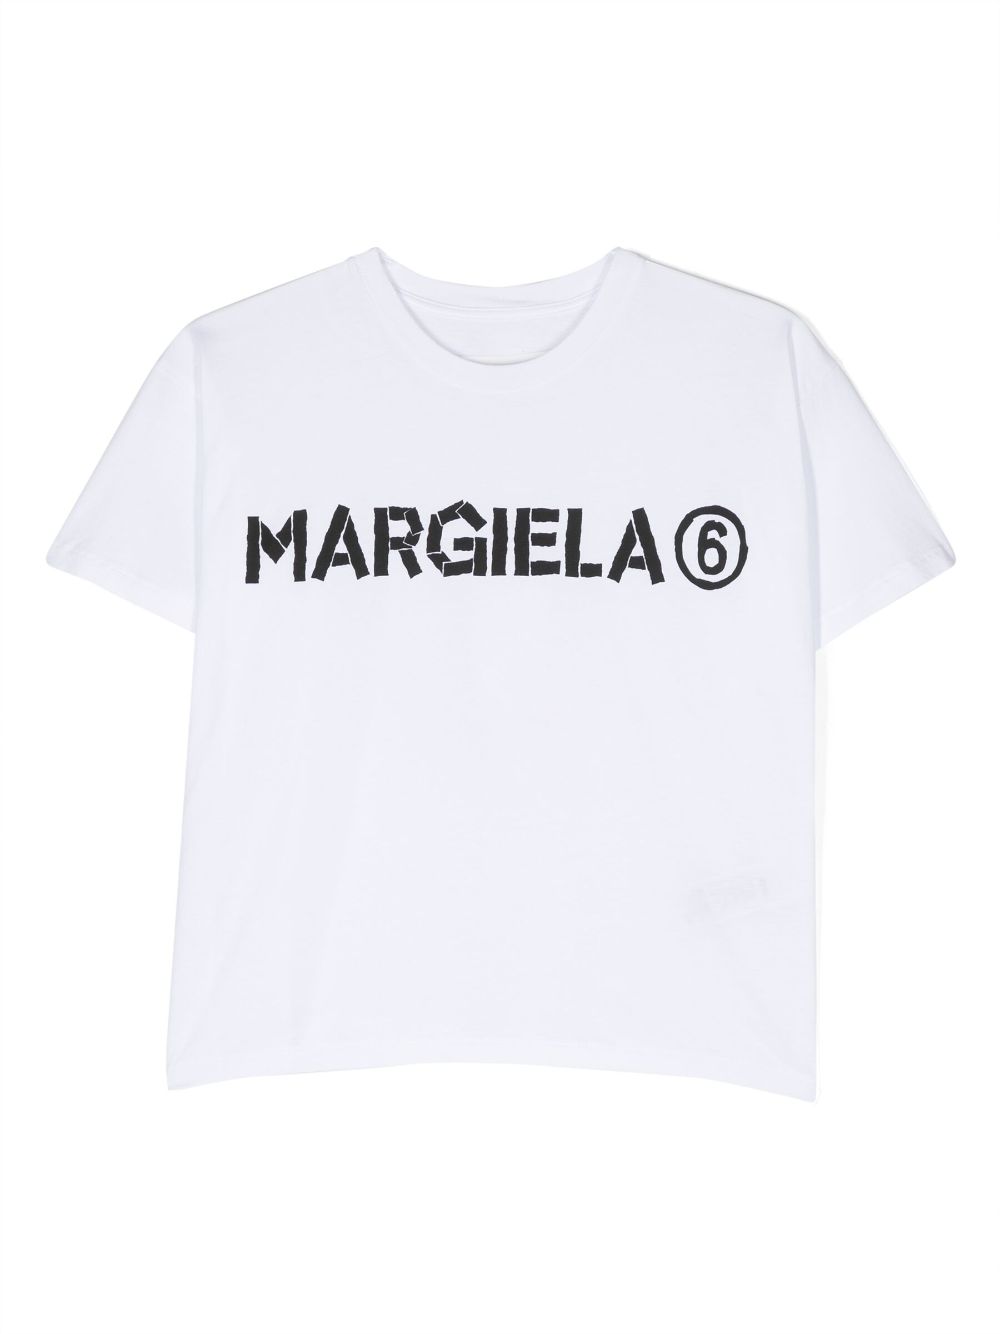 MM6 Maison Margiela Kids logo print short-sleeve T-shirt - White